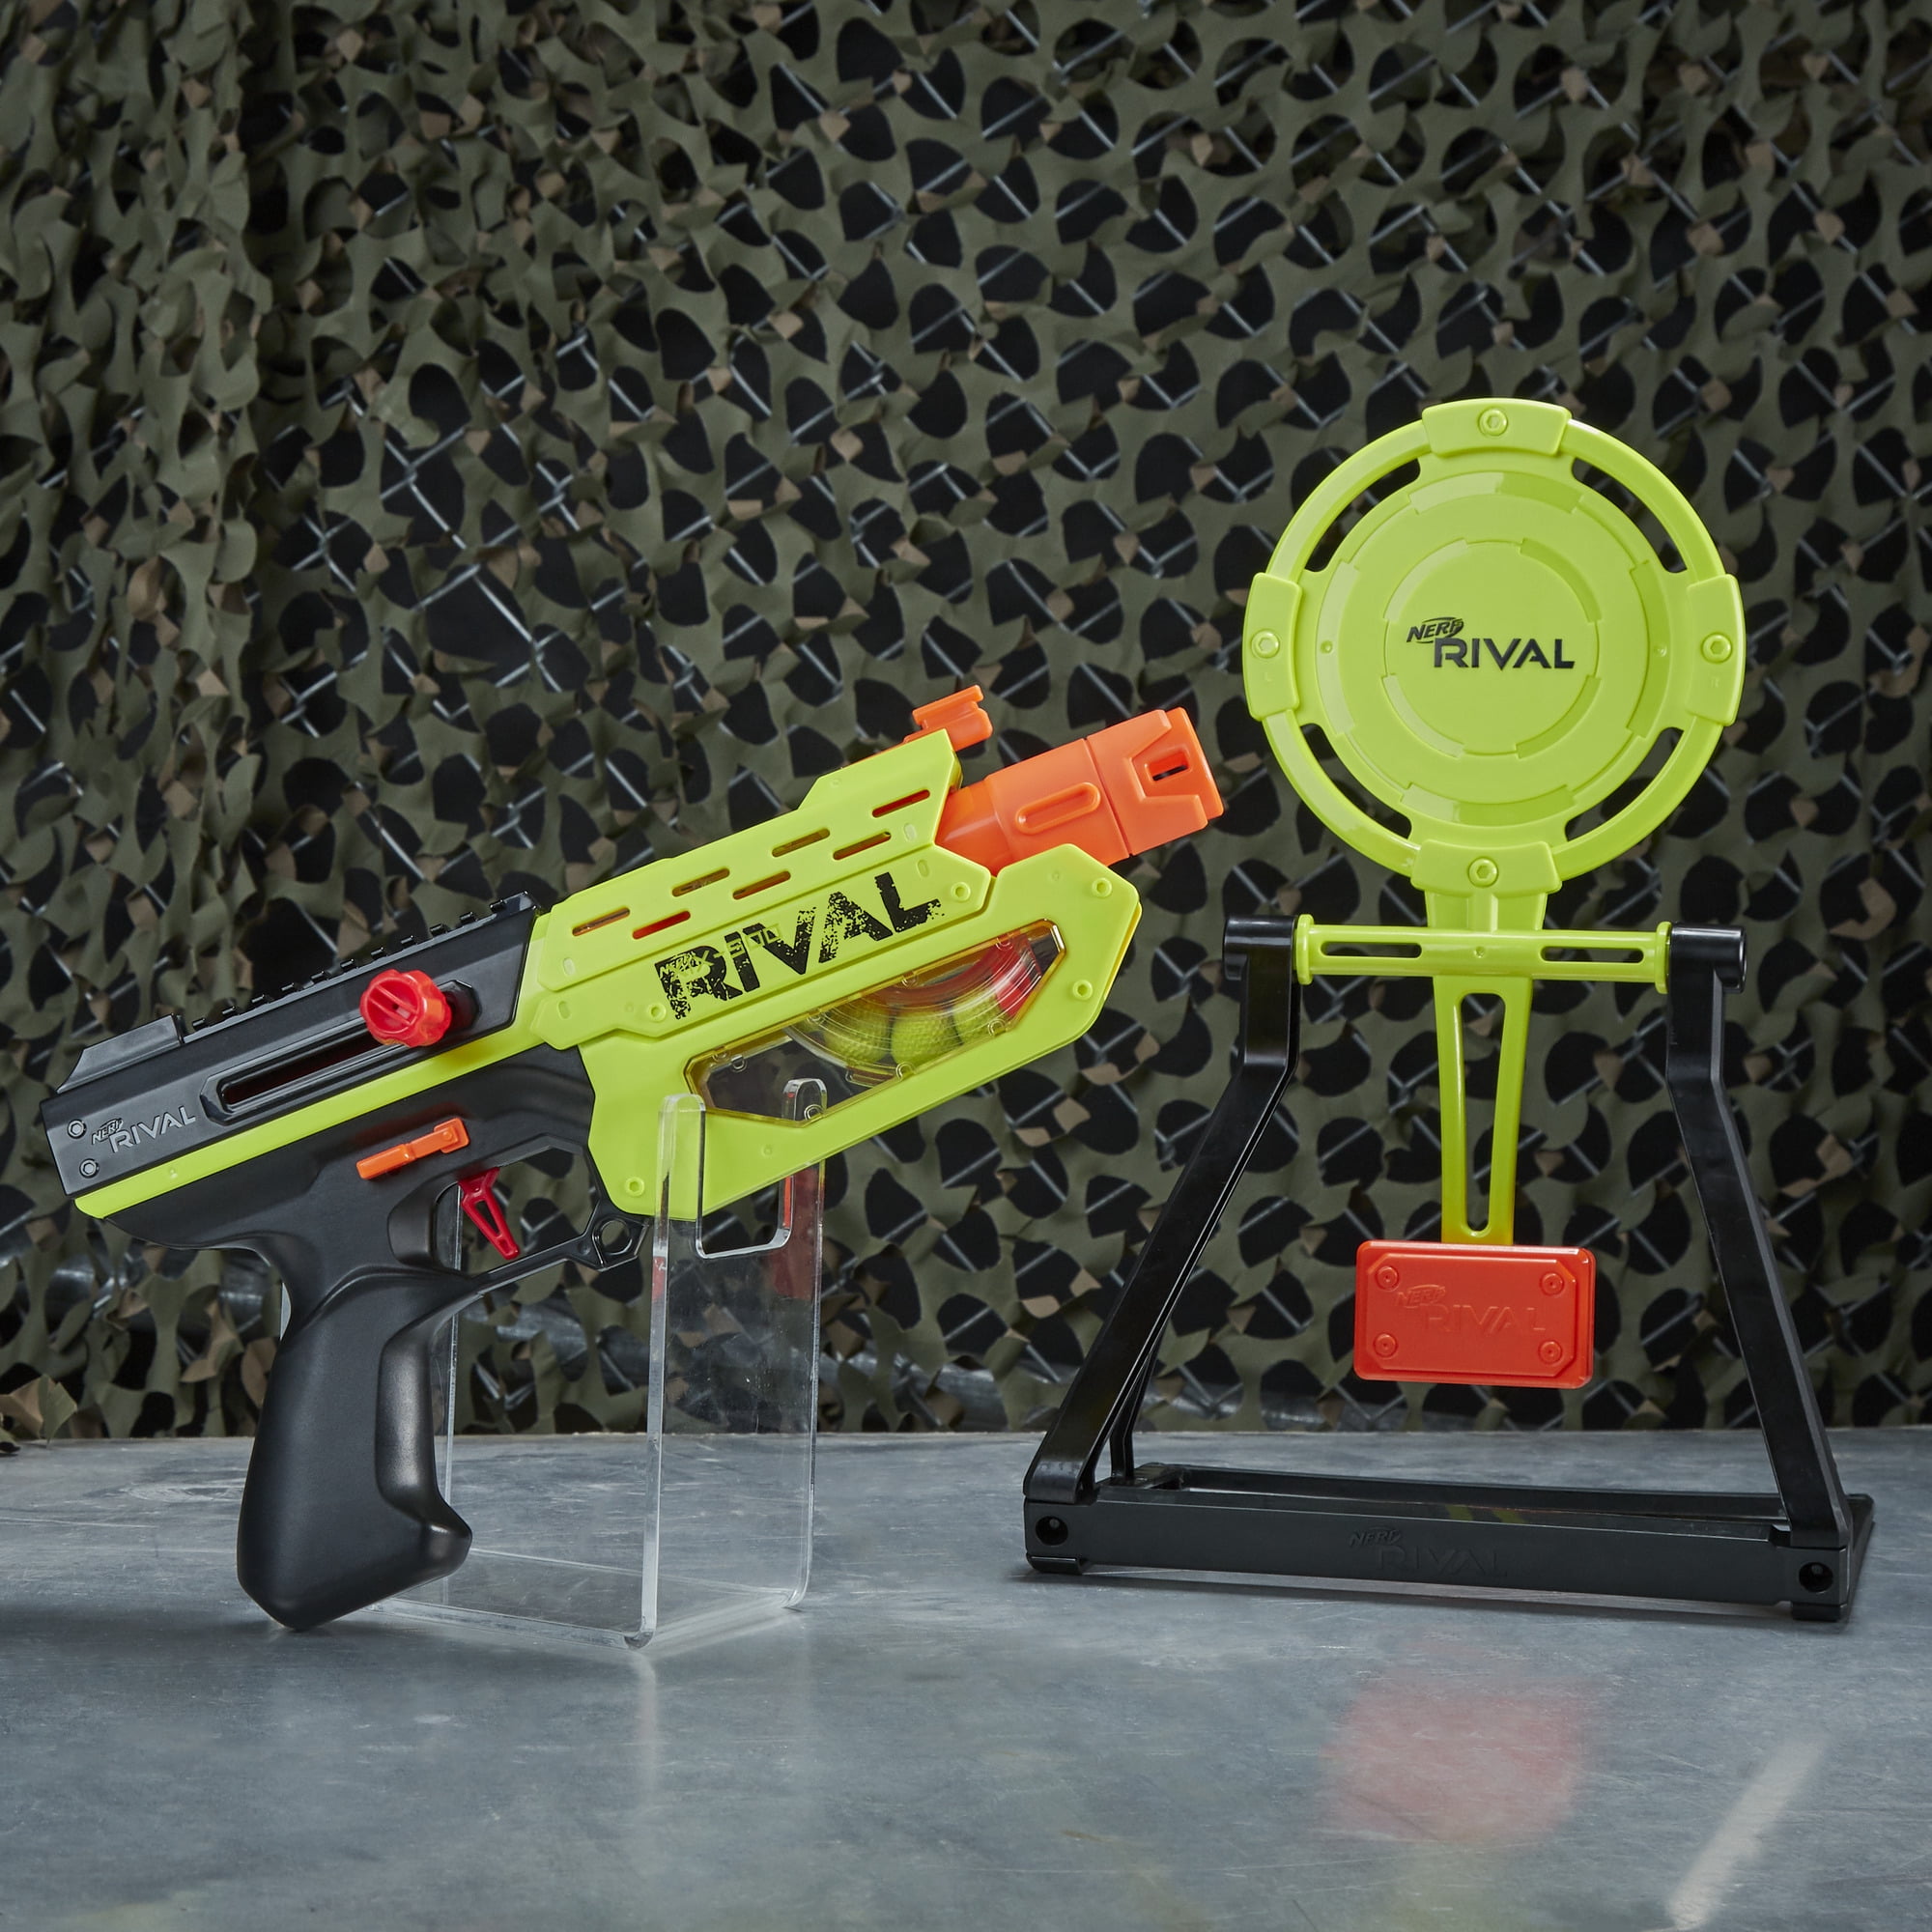 Nerf Rival Mercury Edge Series Blaster Target 5 Rounds Shooting Fun Toy Gun NEW